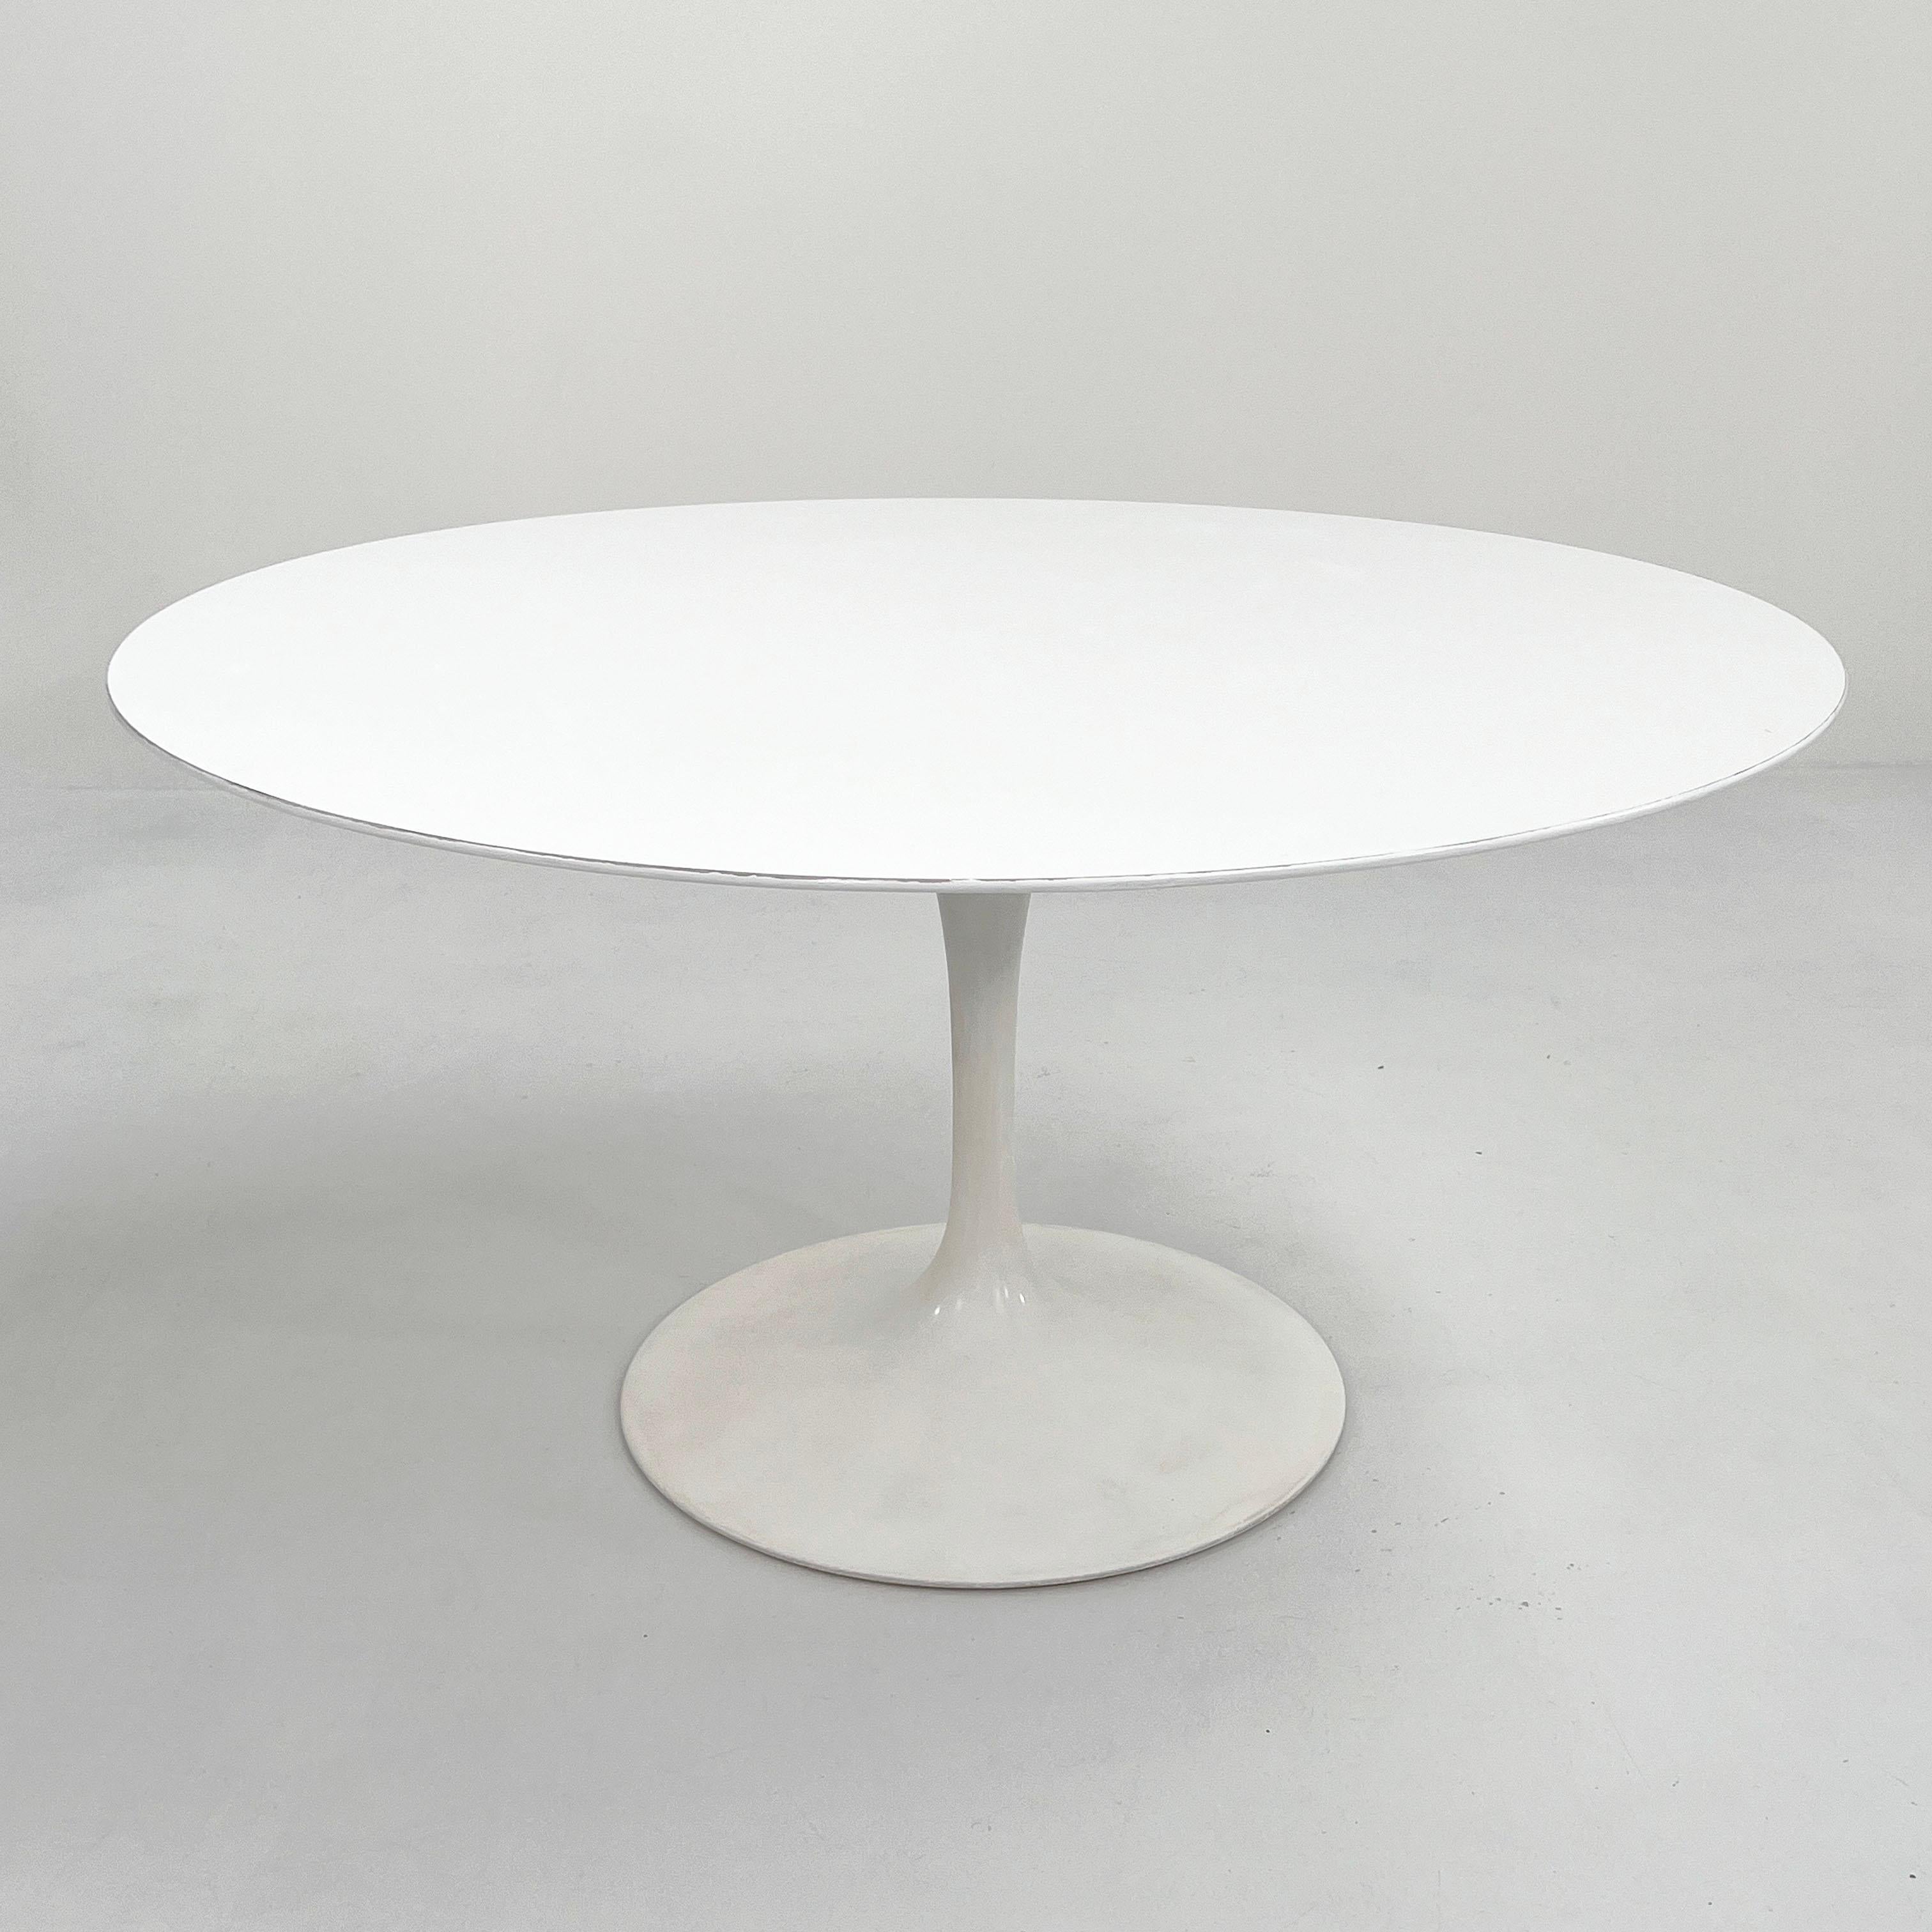 Laminate Tulip dining table 137,5 cm by Eero Saarinen for Knoll, 1970s
Designer - Eero Saarinen
Producer - Knoll
Model - Tulip Table
Design Period - Fifties (Production Period Seventies) 
Measurements - Width 137,5 cm x Depth 137,5 cm x Height